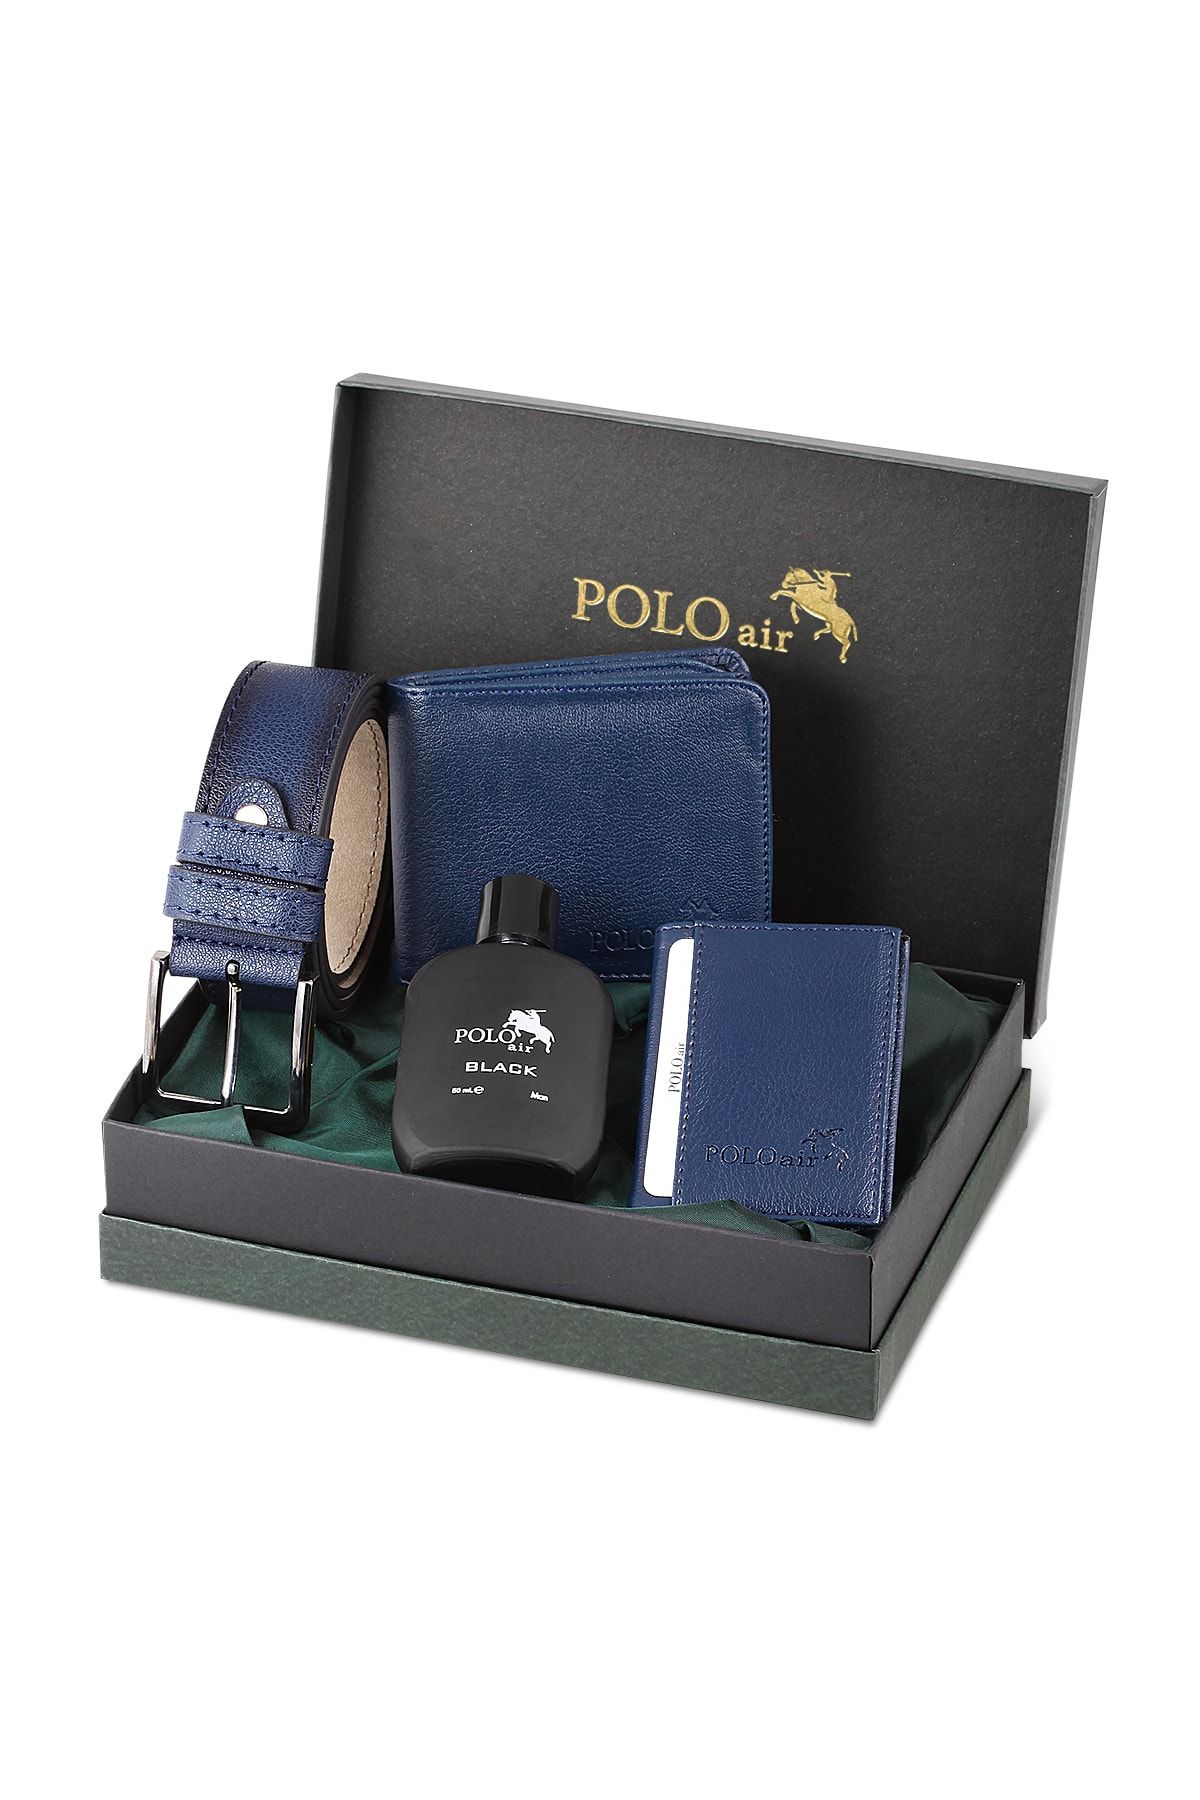 polo air Kutulu Klasik Erkek Cüzdan Kemer Kartlık Parfüm Seti Lacivert